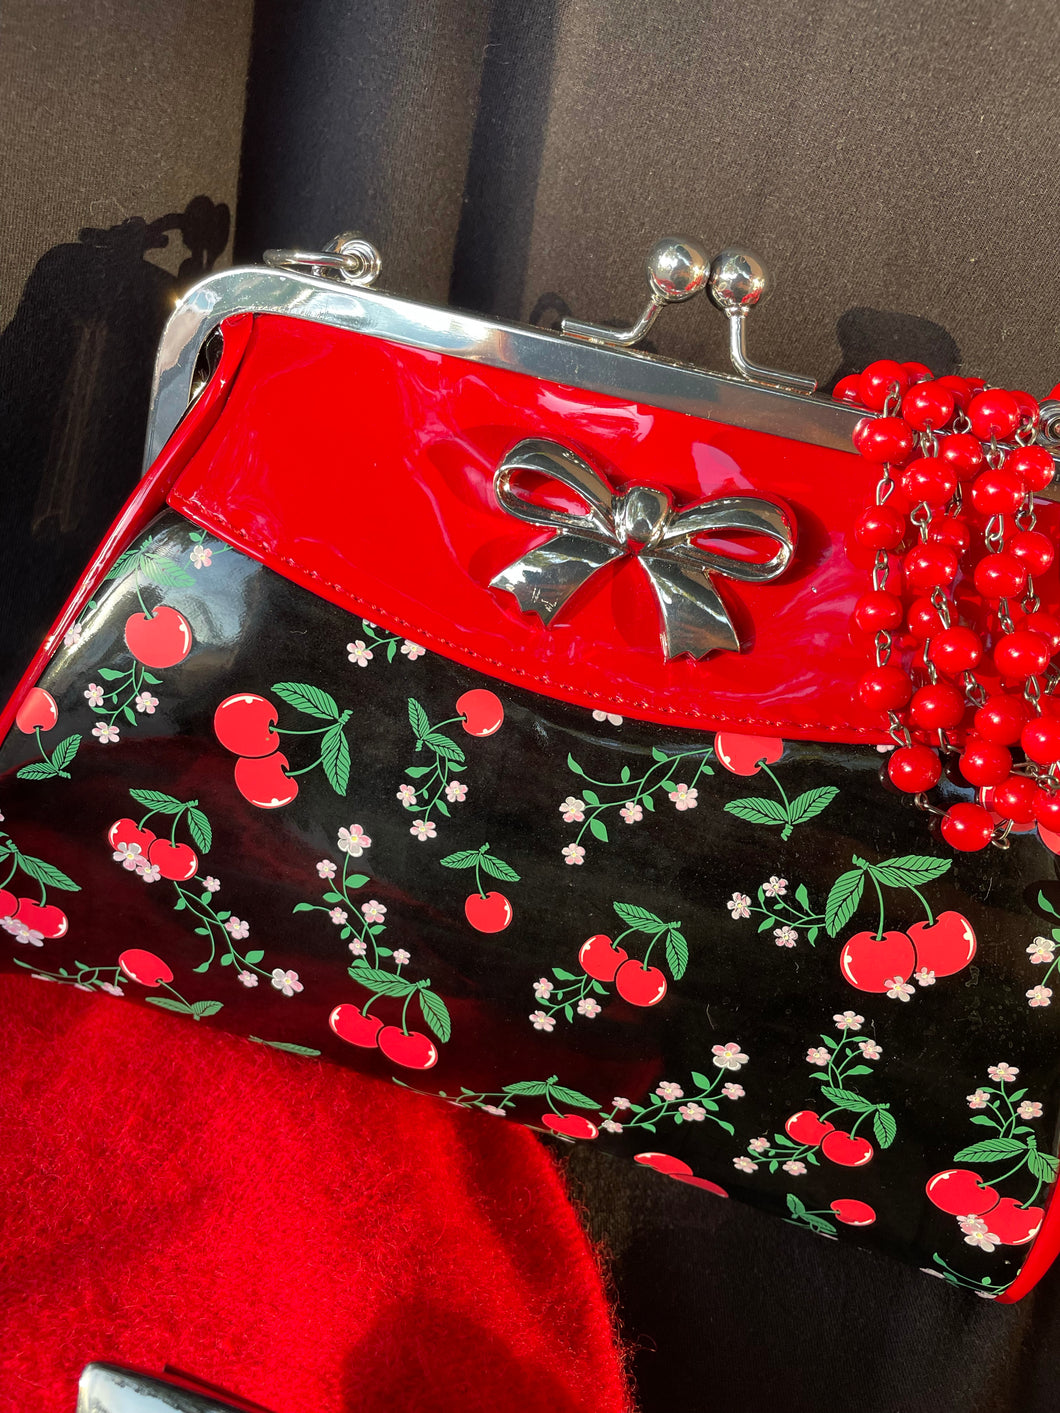 Mini Cherry Print Classic Kisslock Handbag